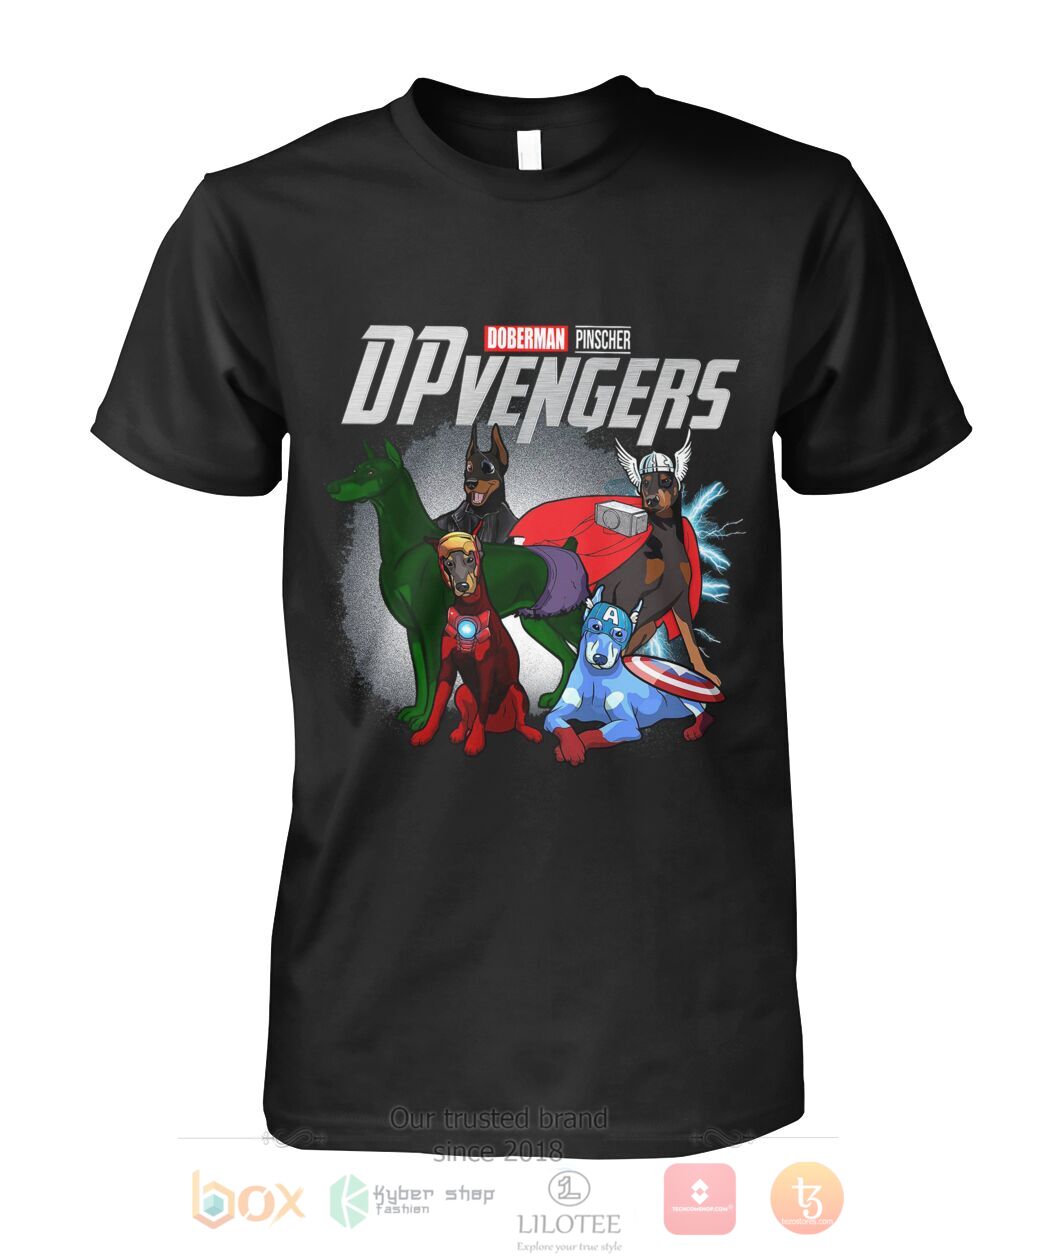 Doberman Dpvengers 3D Hoodie Shirt